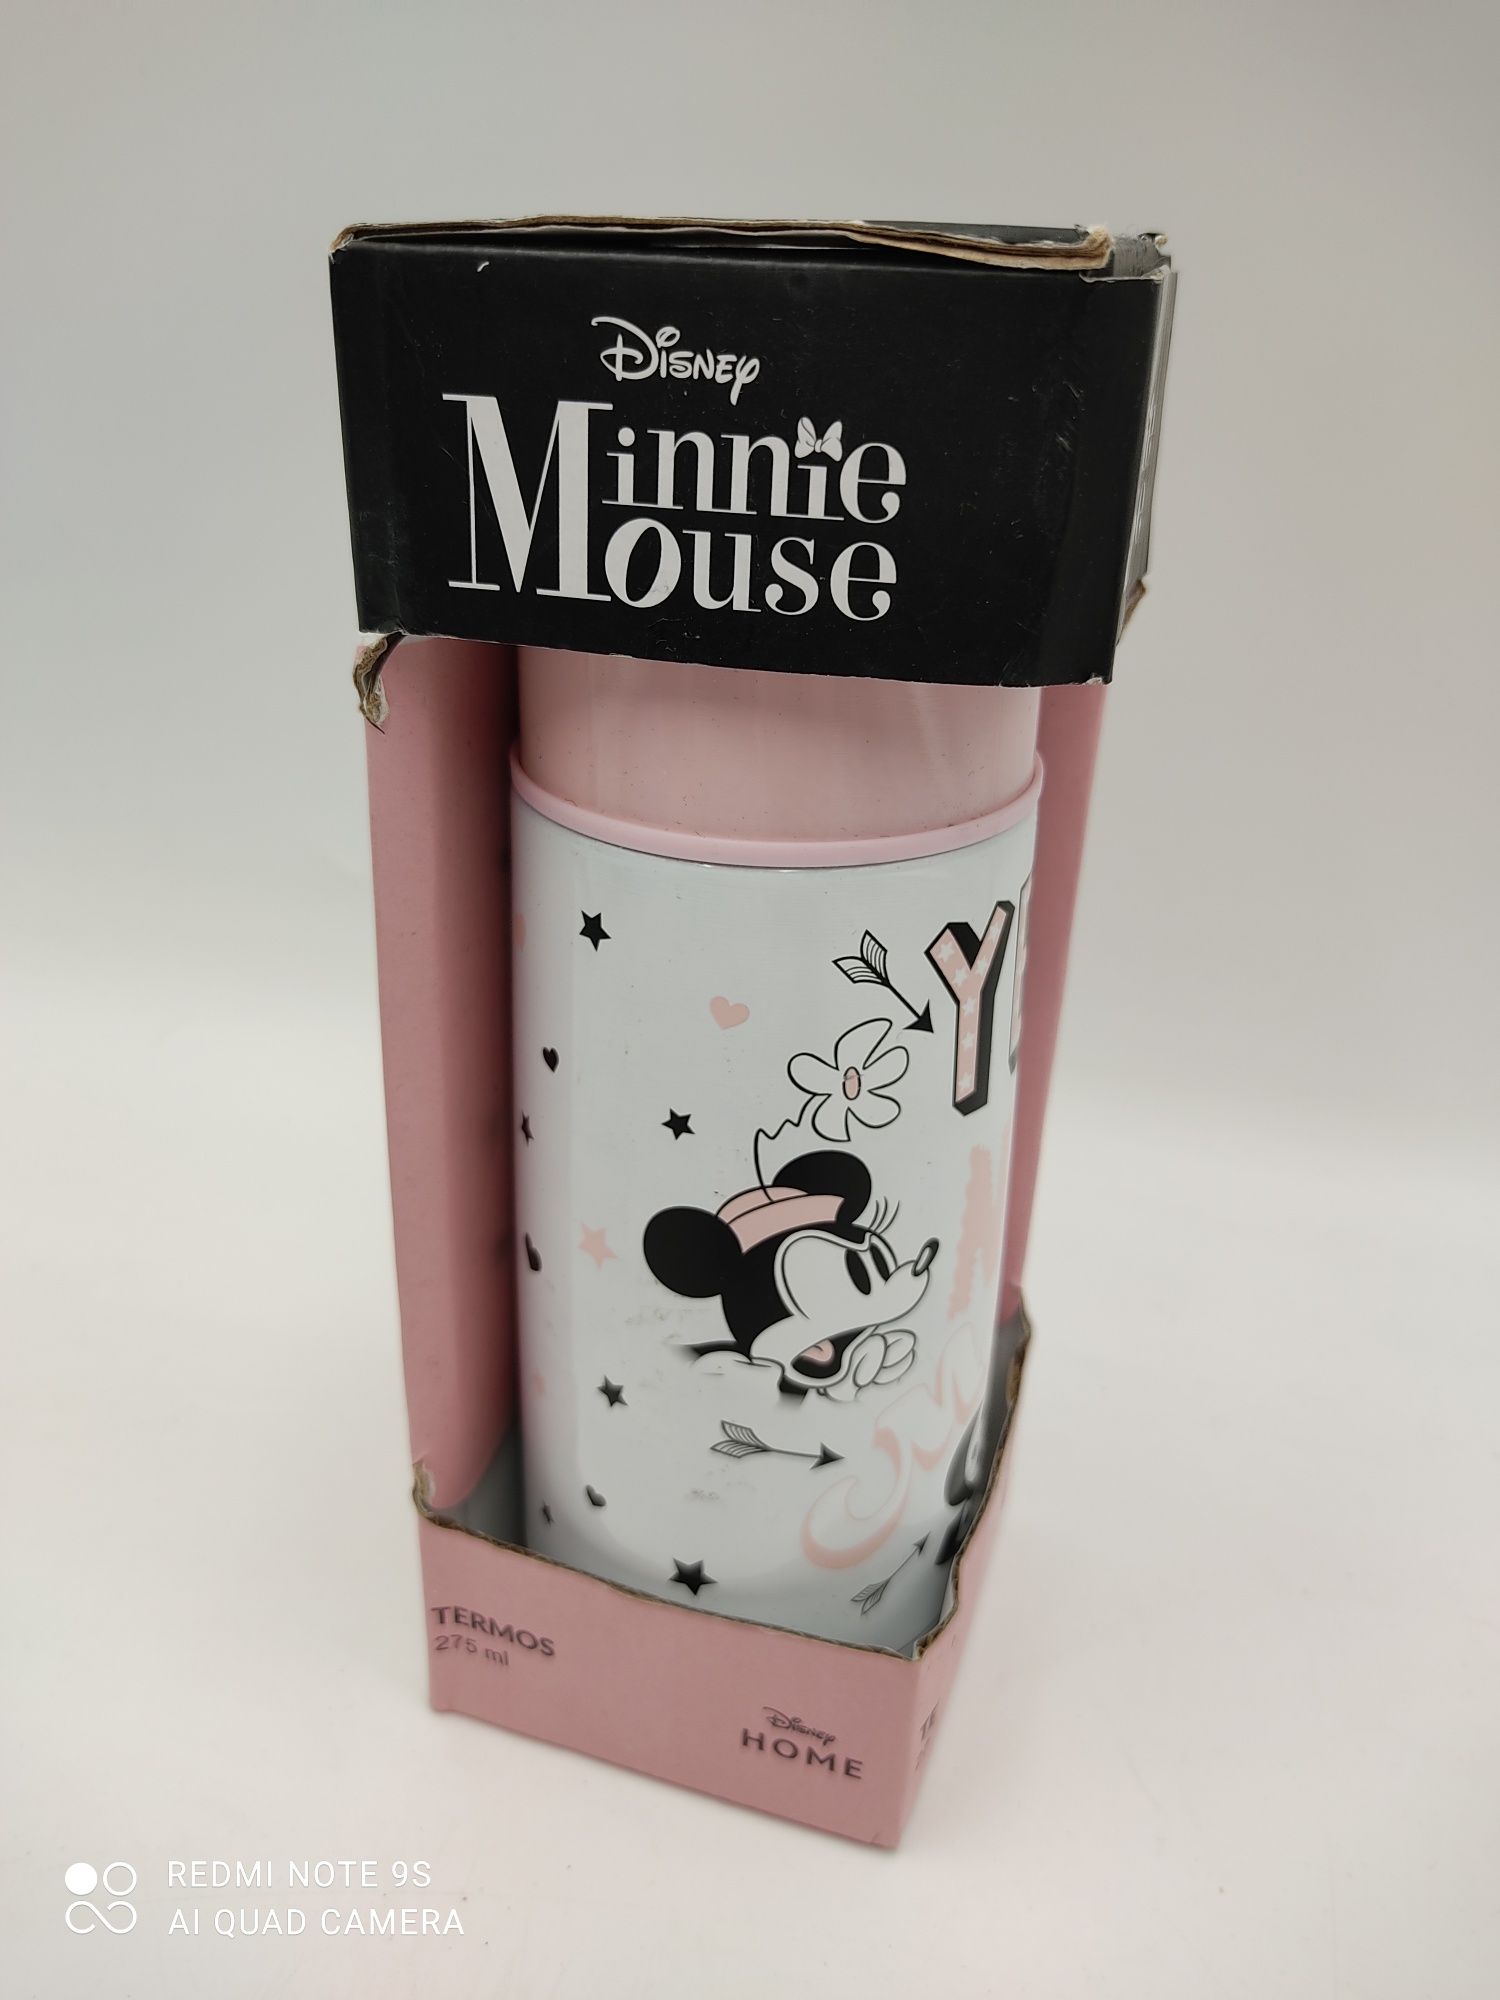 Termos Minnie Mouse 275 ml